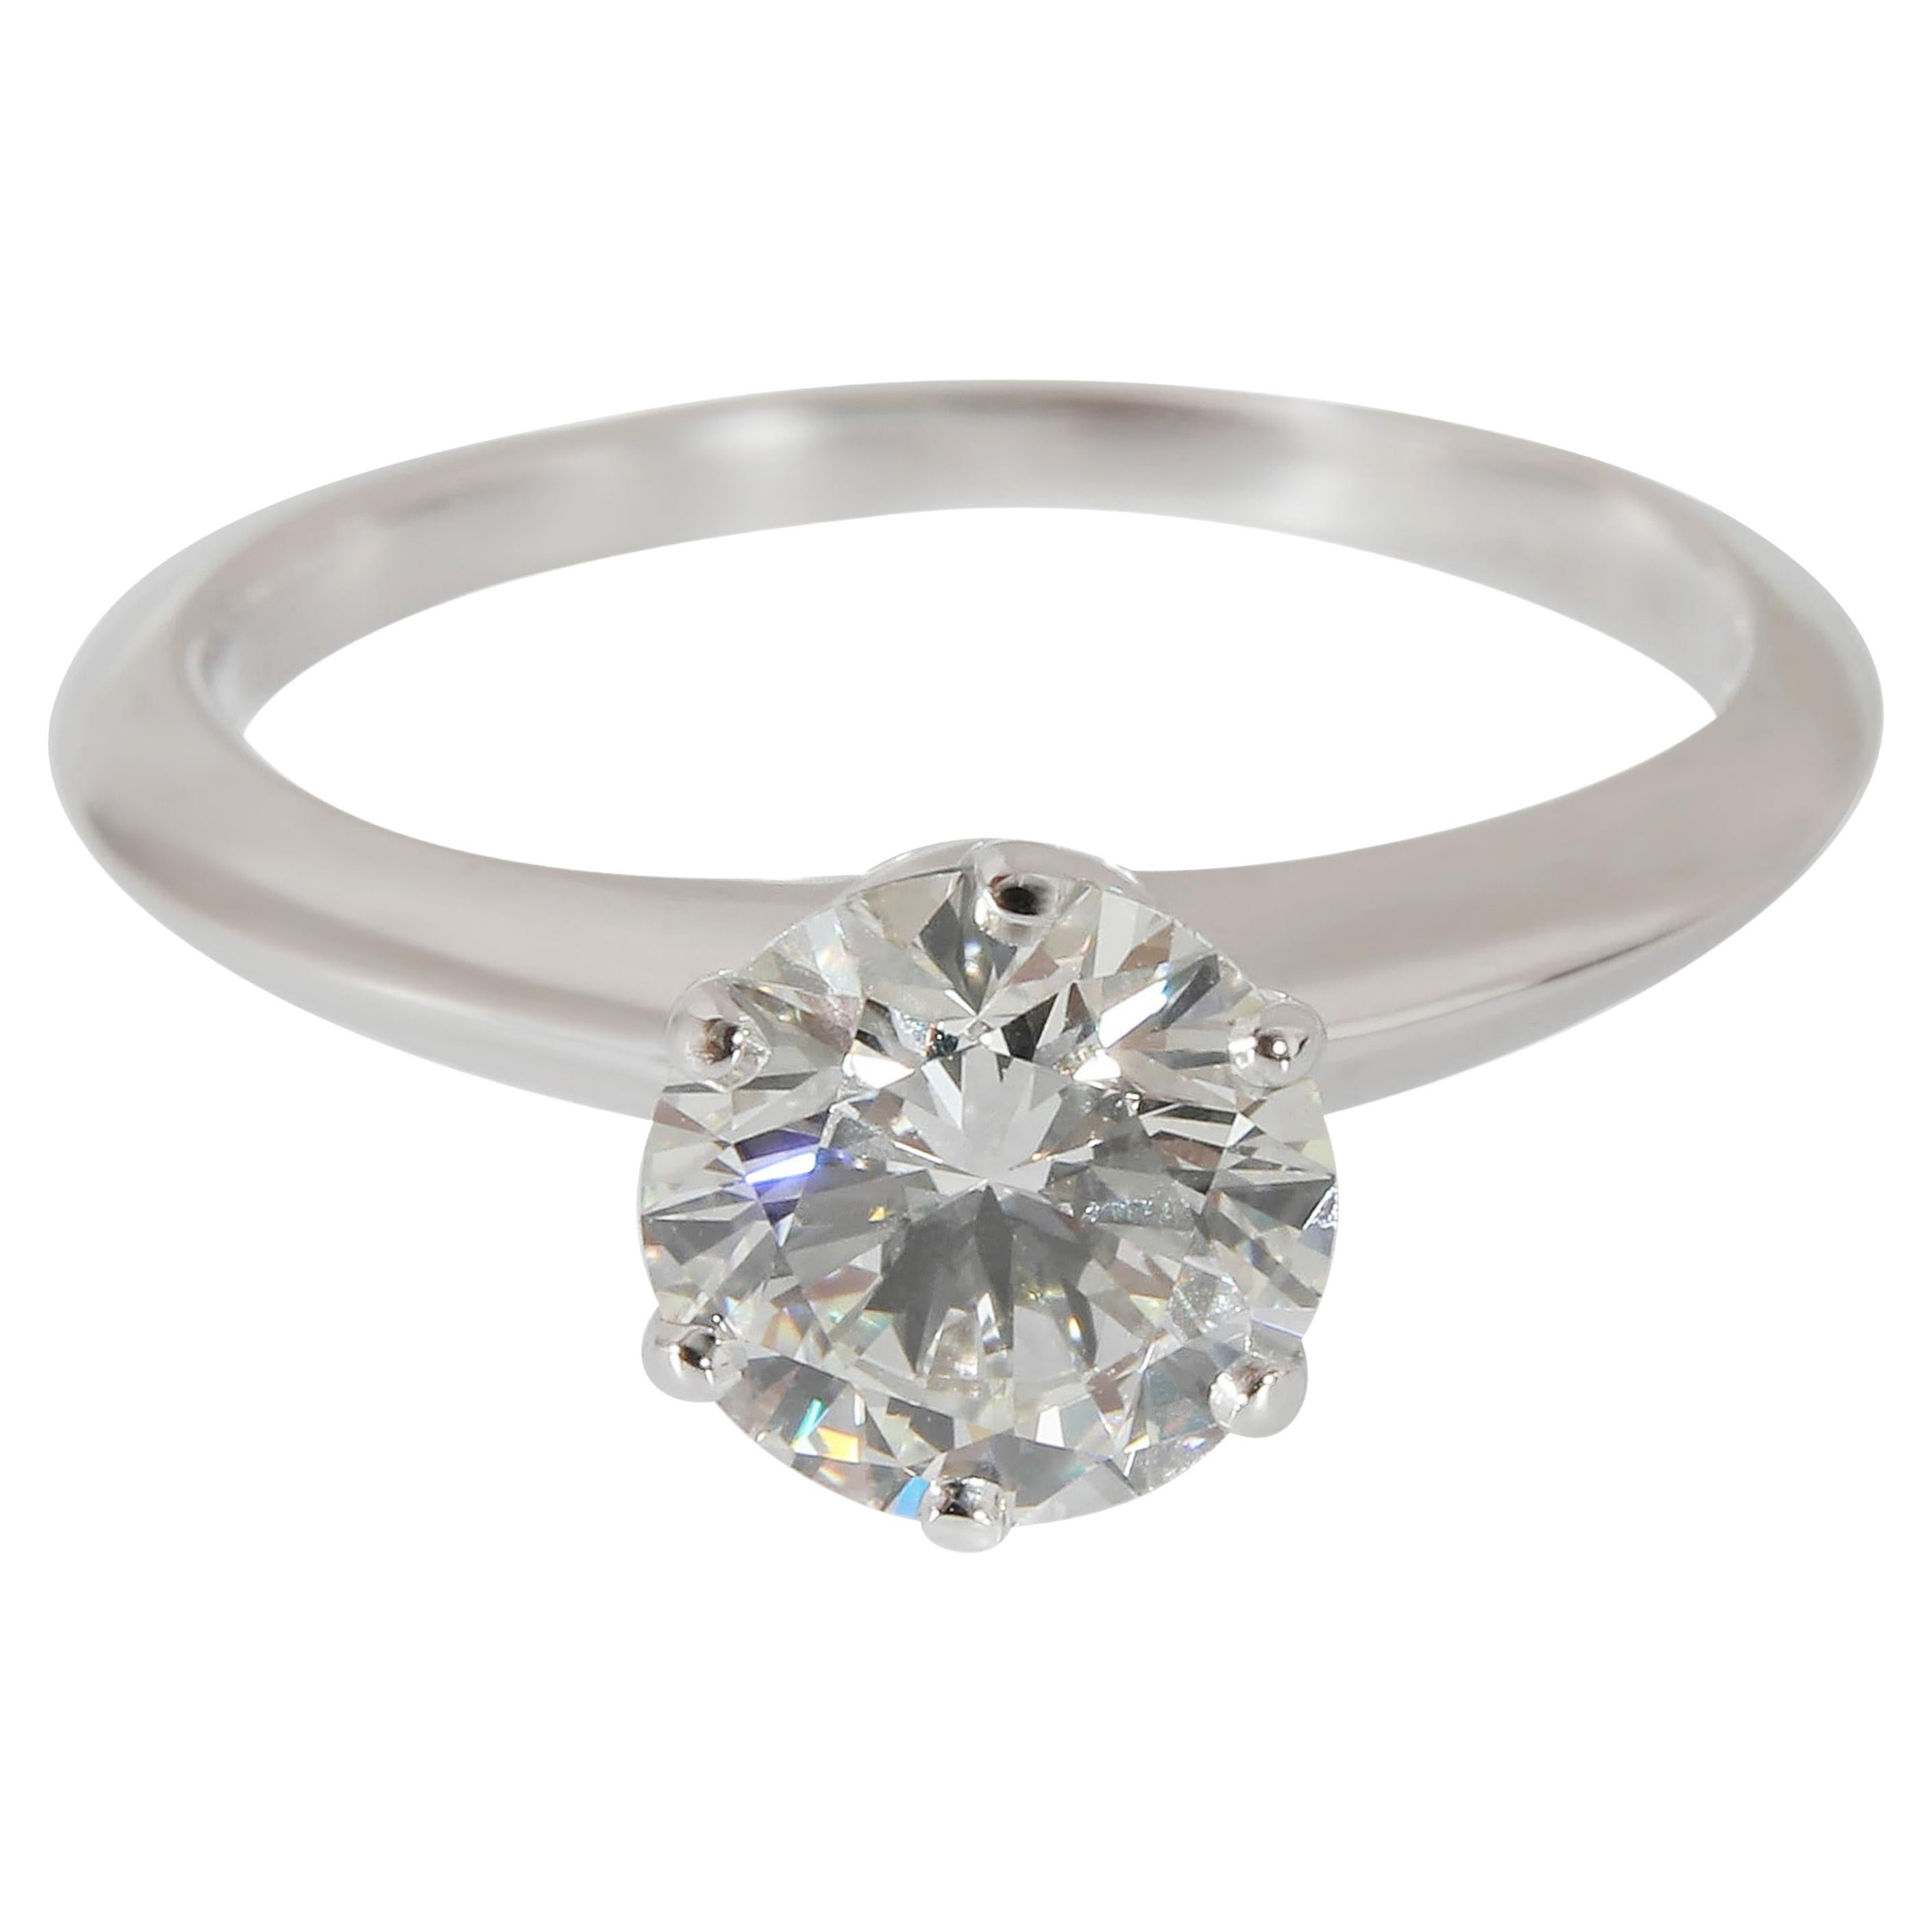 Tiffany & Co. Diamond Engagement Ring in Platinum I VVS2 1.29 CTW